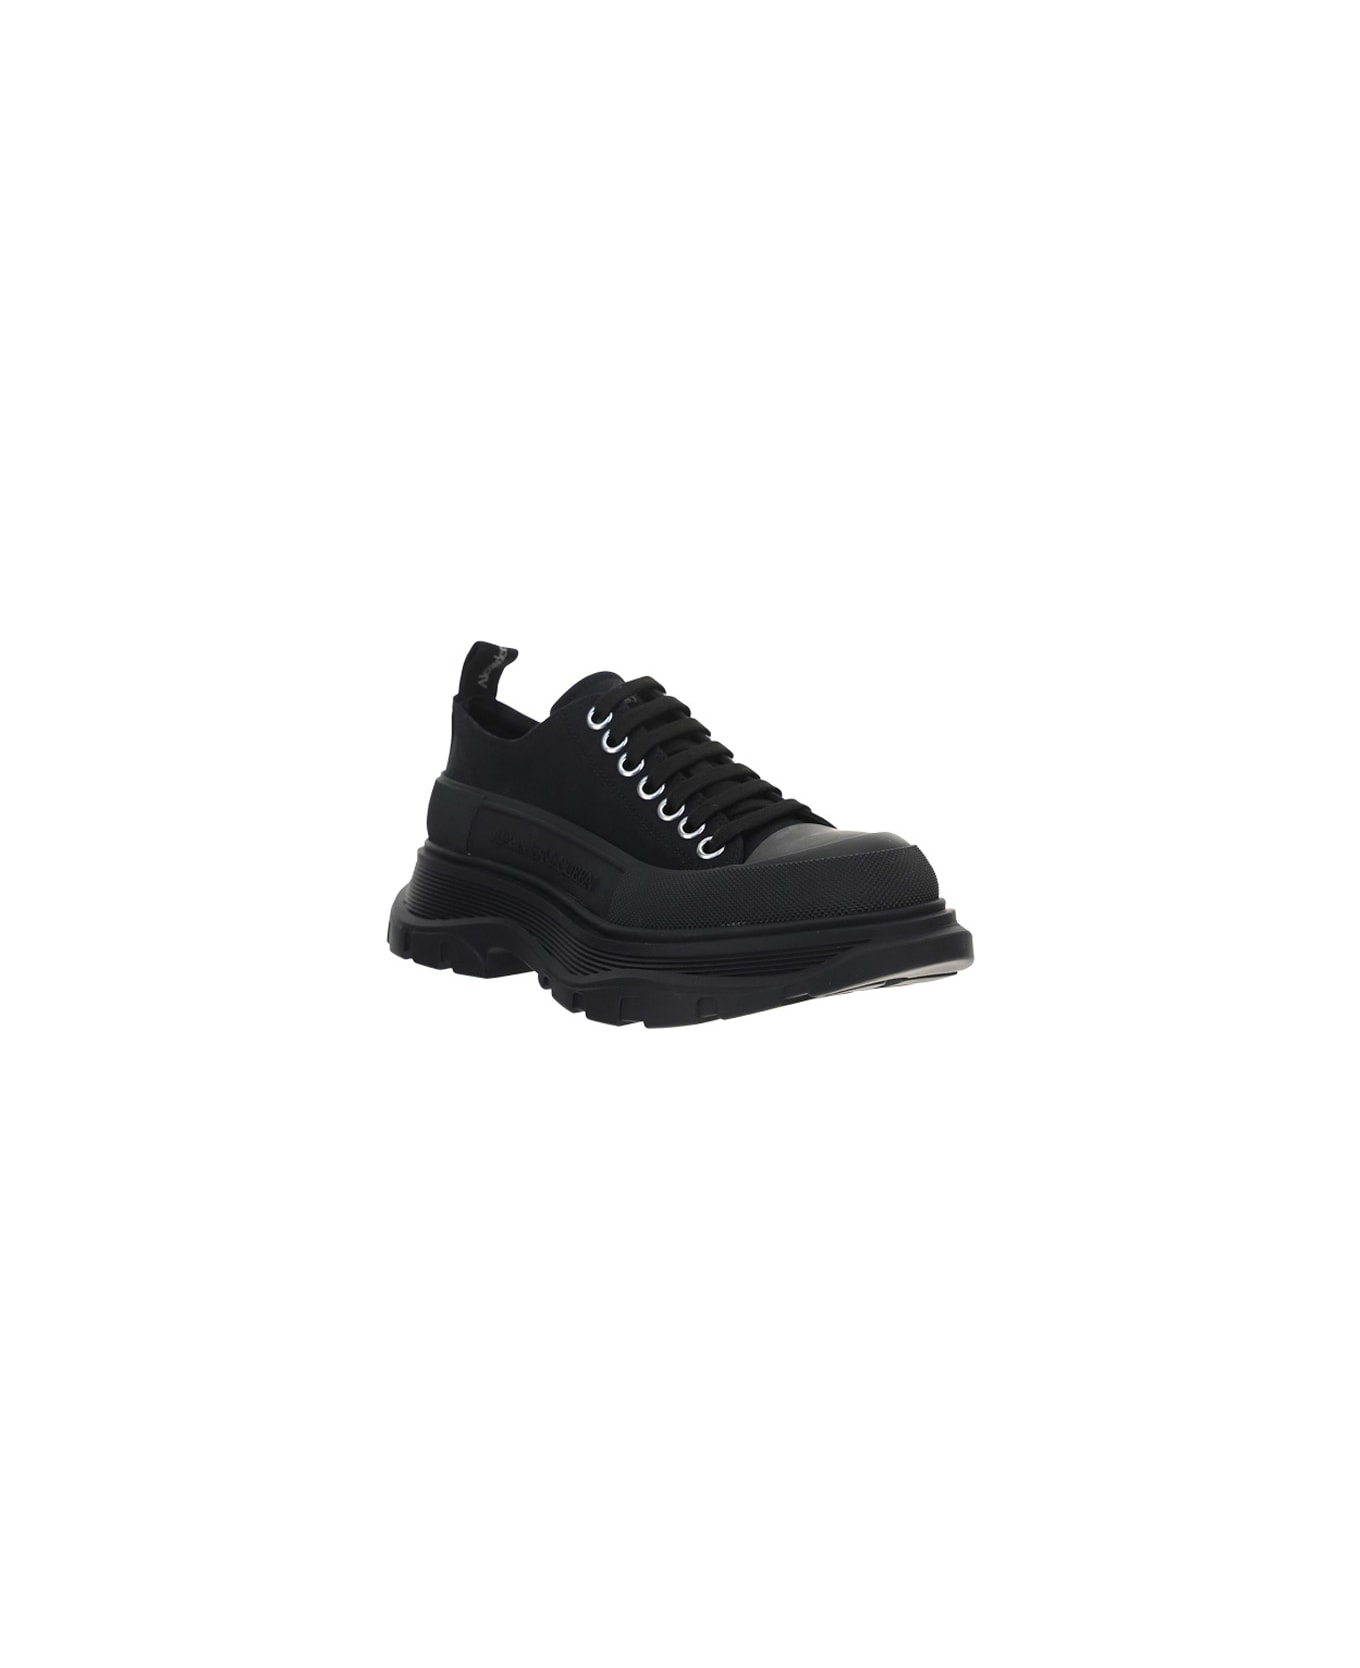 Alexander McQueen Tread Slick Laced Up Shoes - Black/black